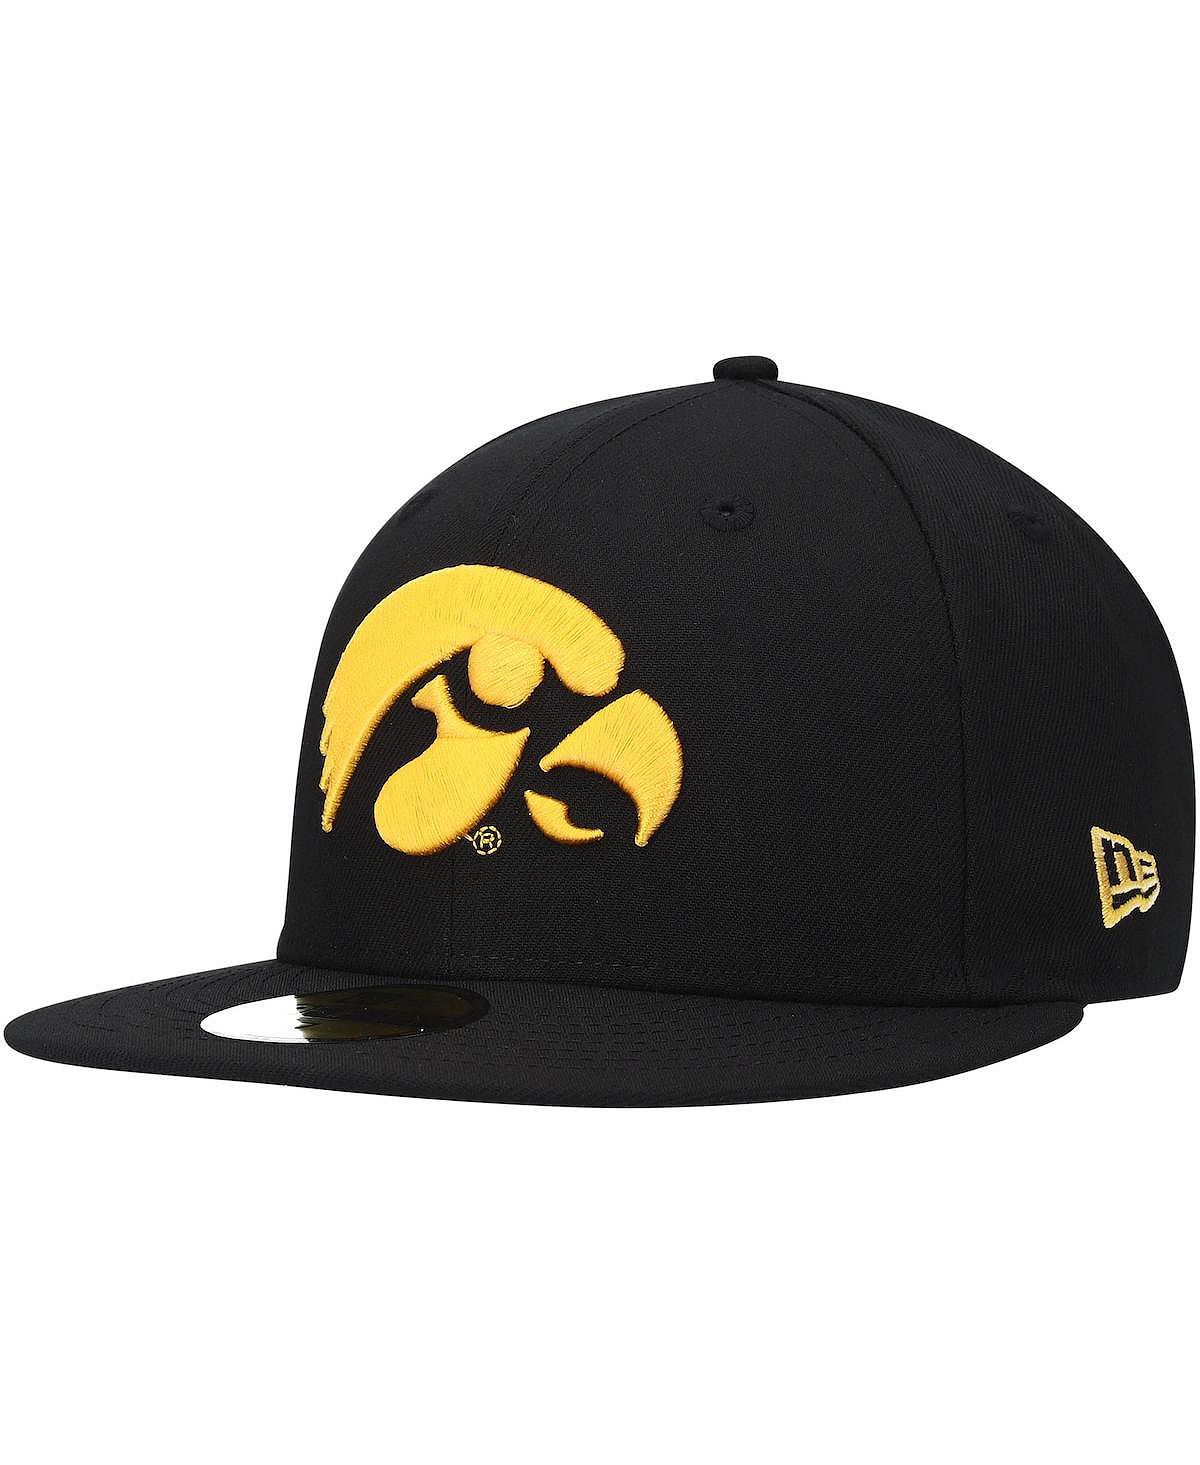 Мужская базовая шляпа с логотипом Iowa Hawkeyes черного цвета 59FIFTY New Era